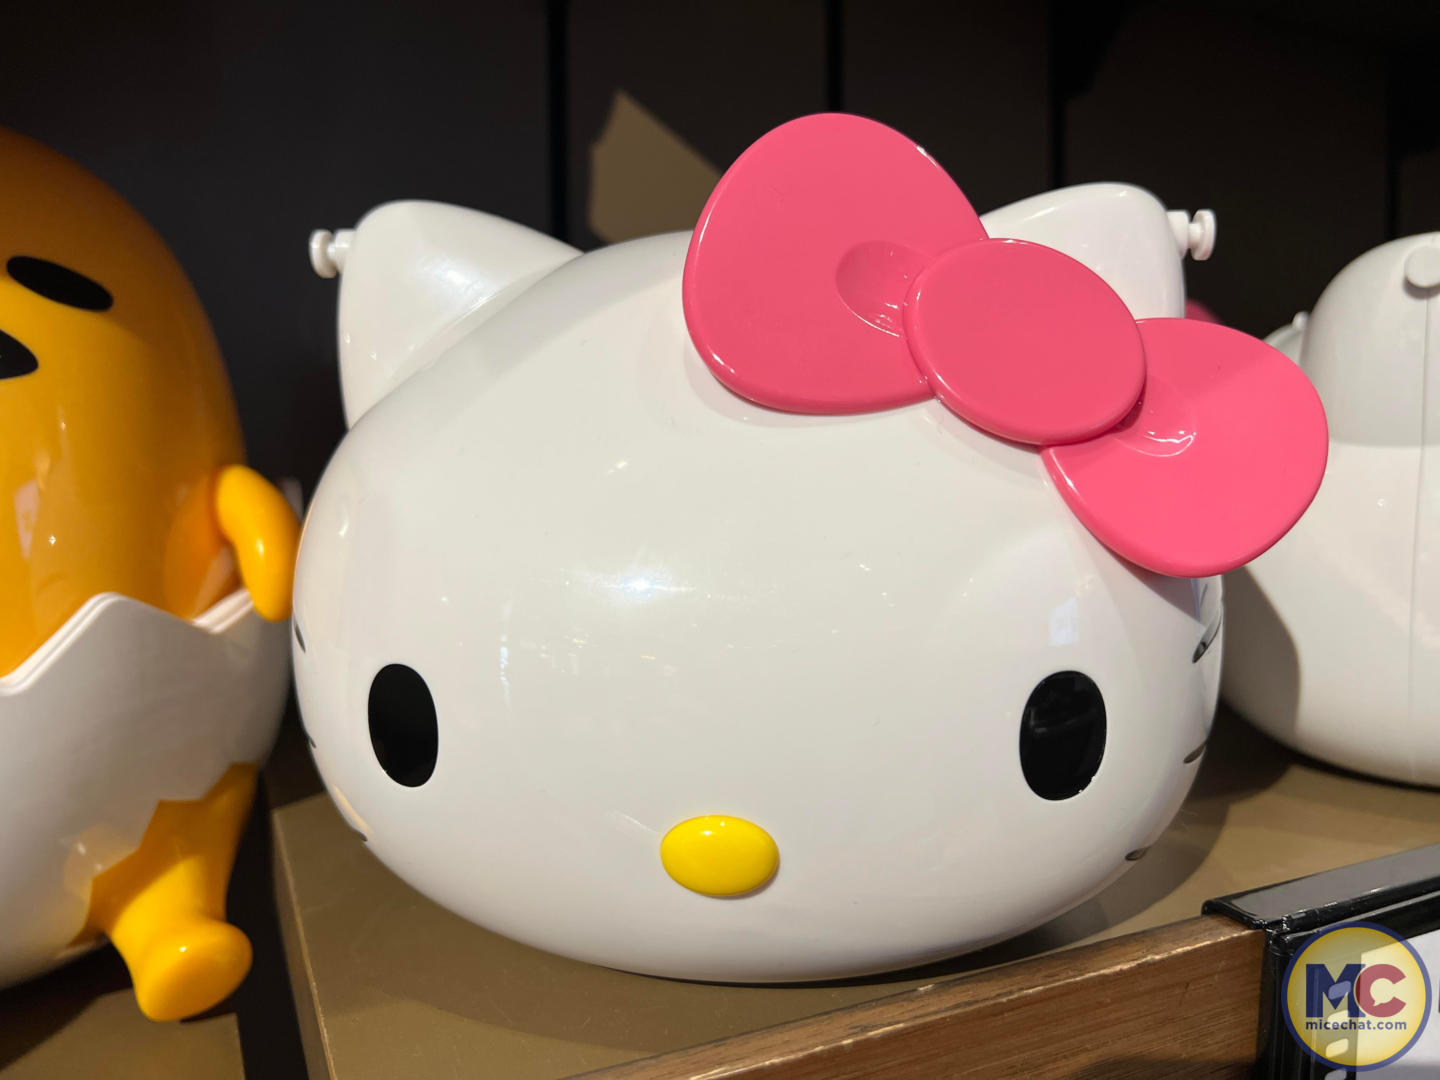 New Hello Kitty Popcorn Bucket Arrives at Universal Studios Florida - WDW  News Today